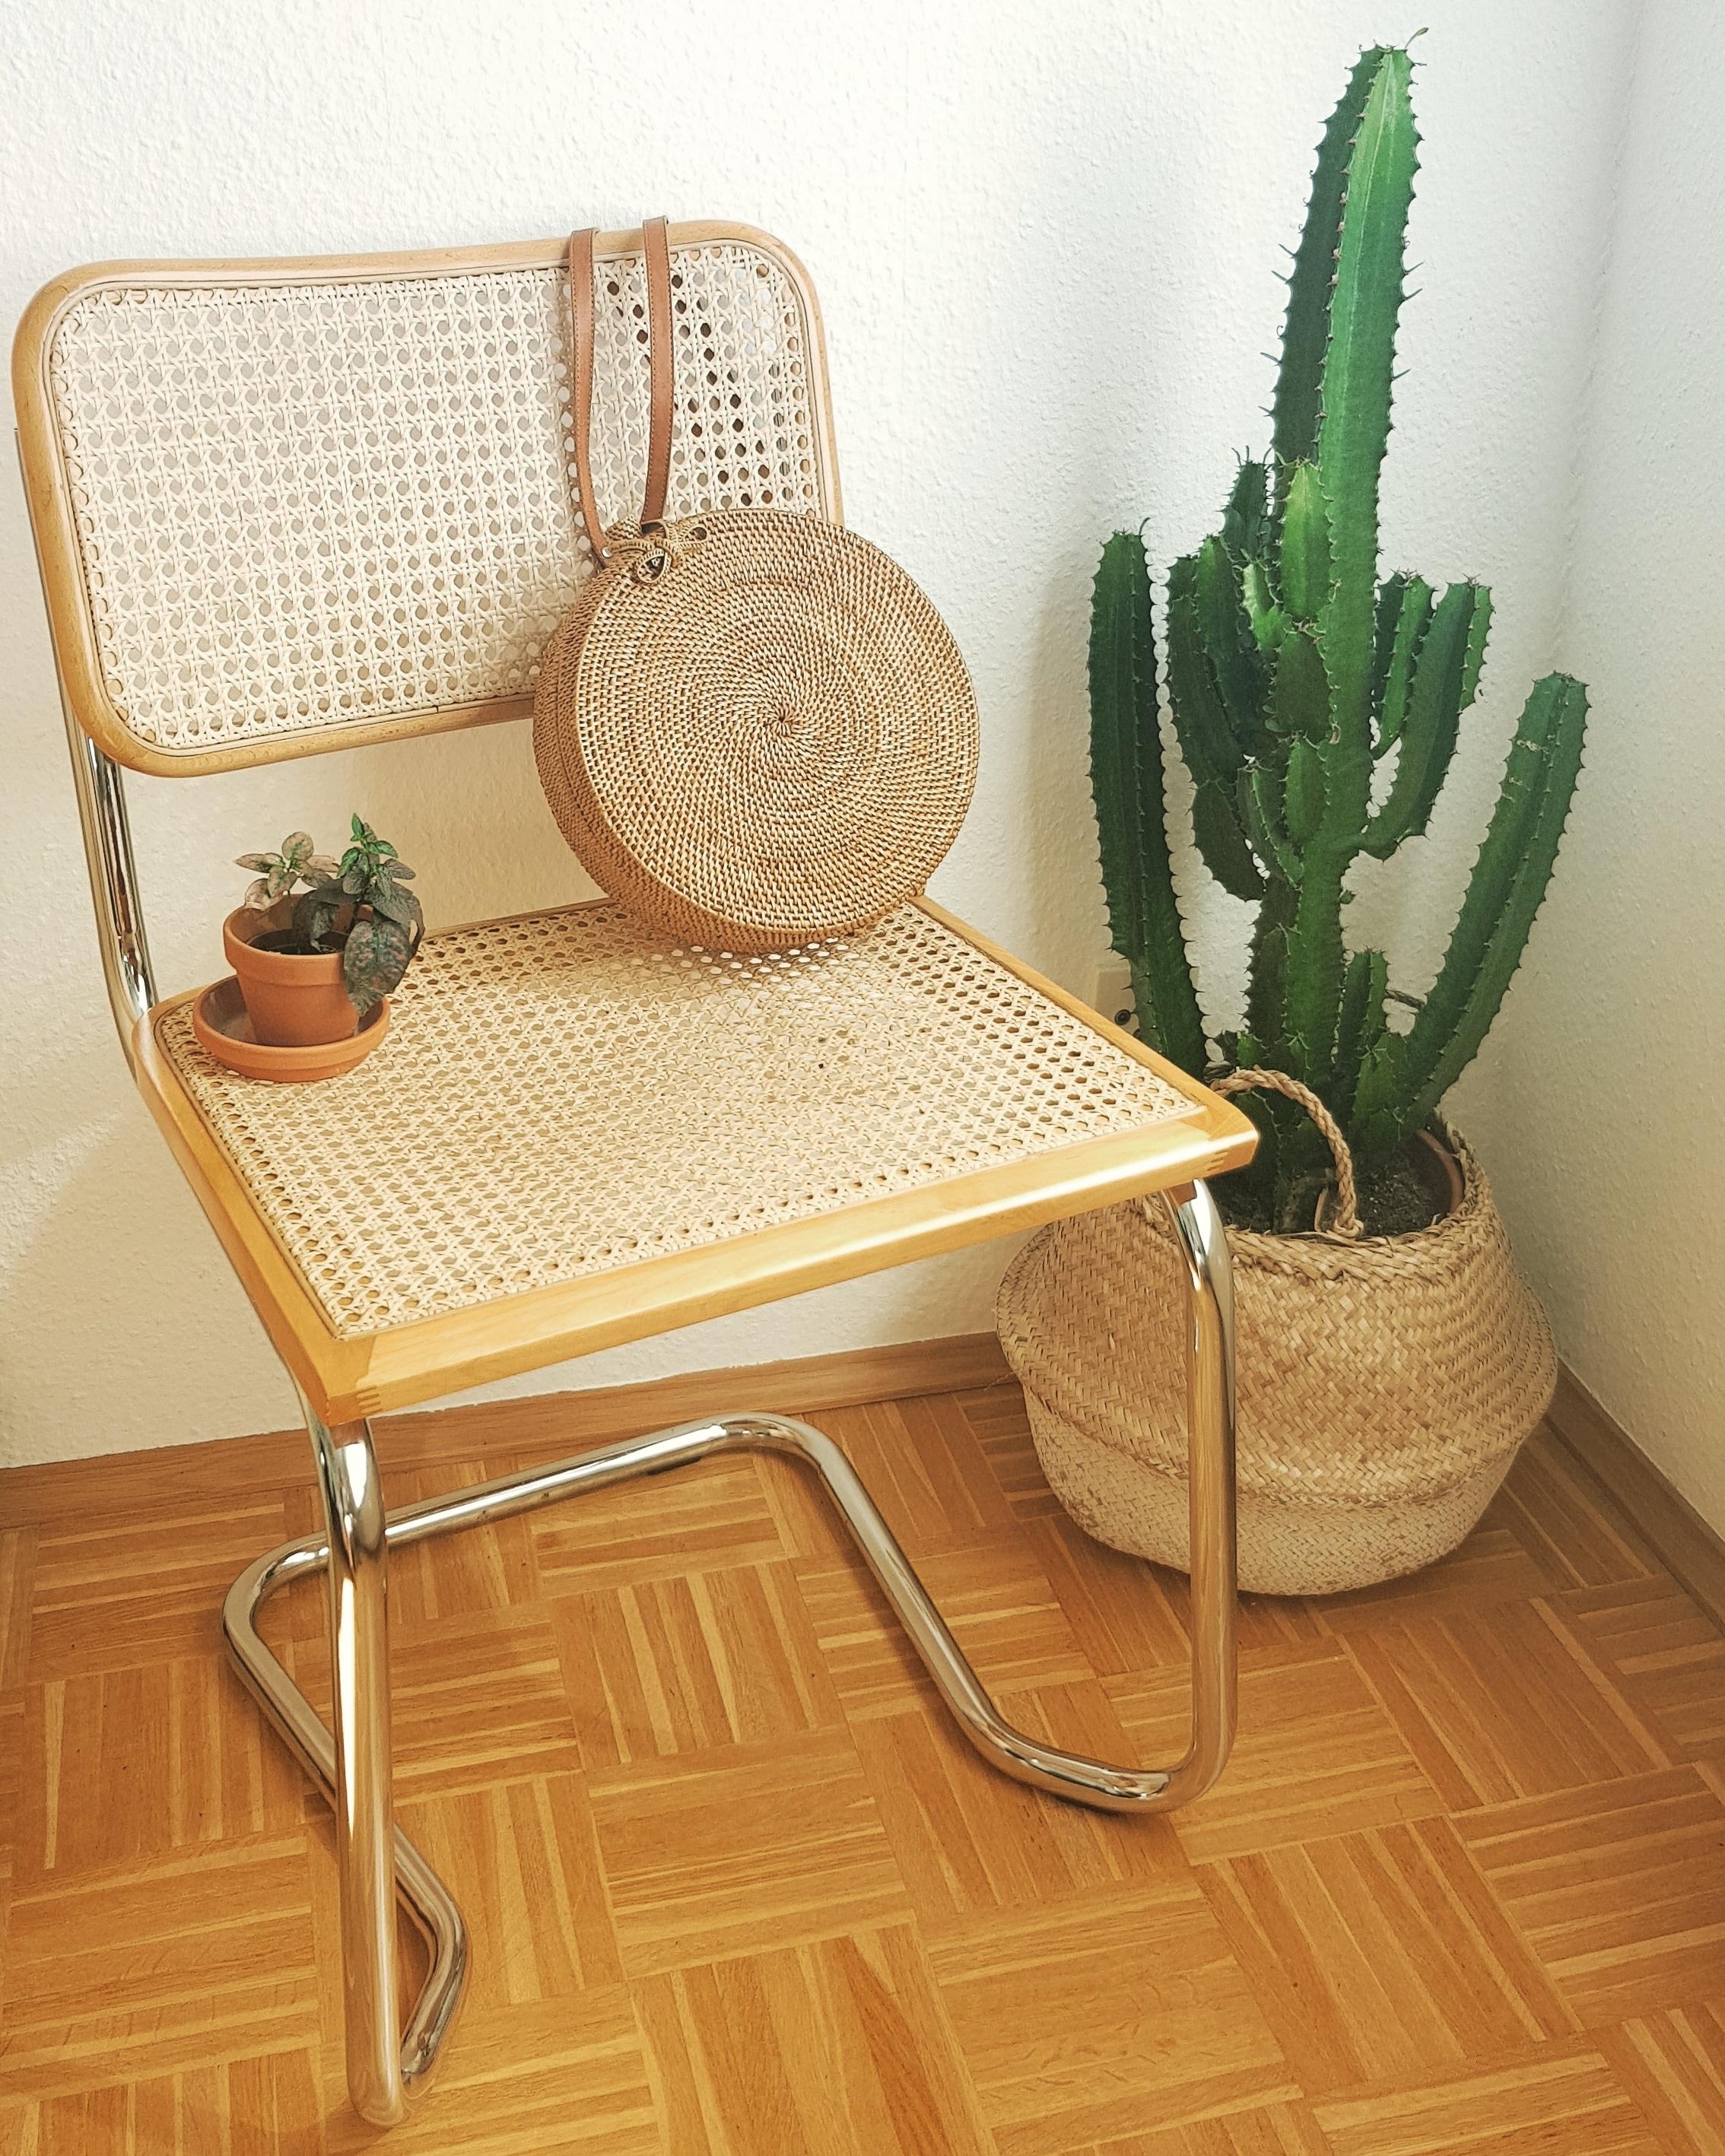 #newchair
#rattanchair #chair #vintage #retro #rattan #interior #balibag #interiordesign 